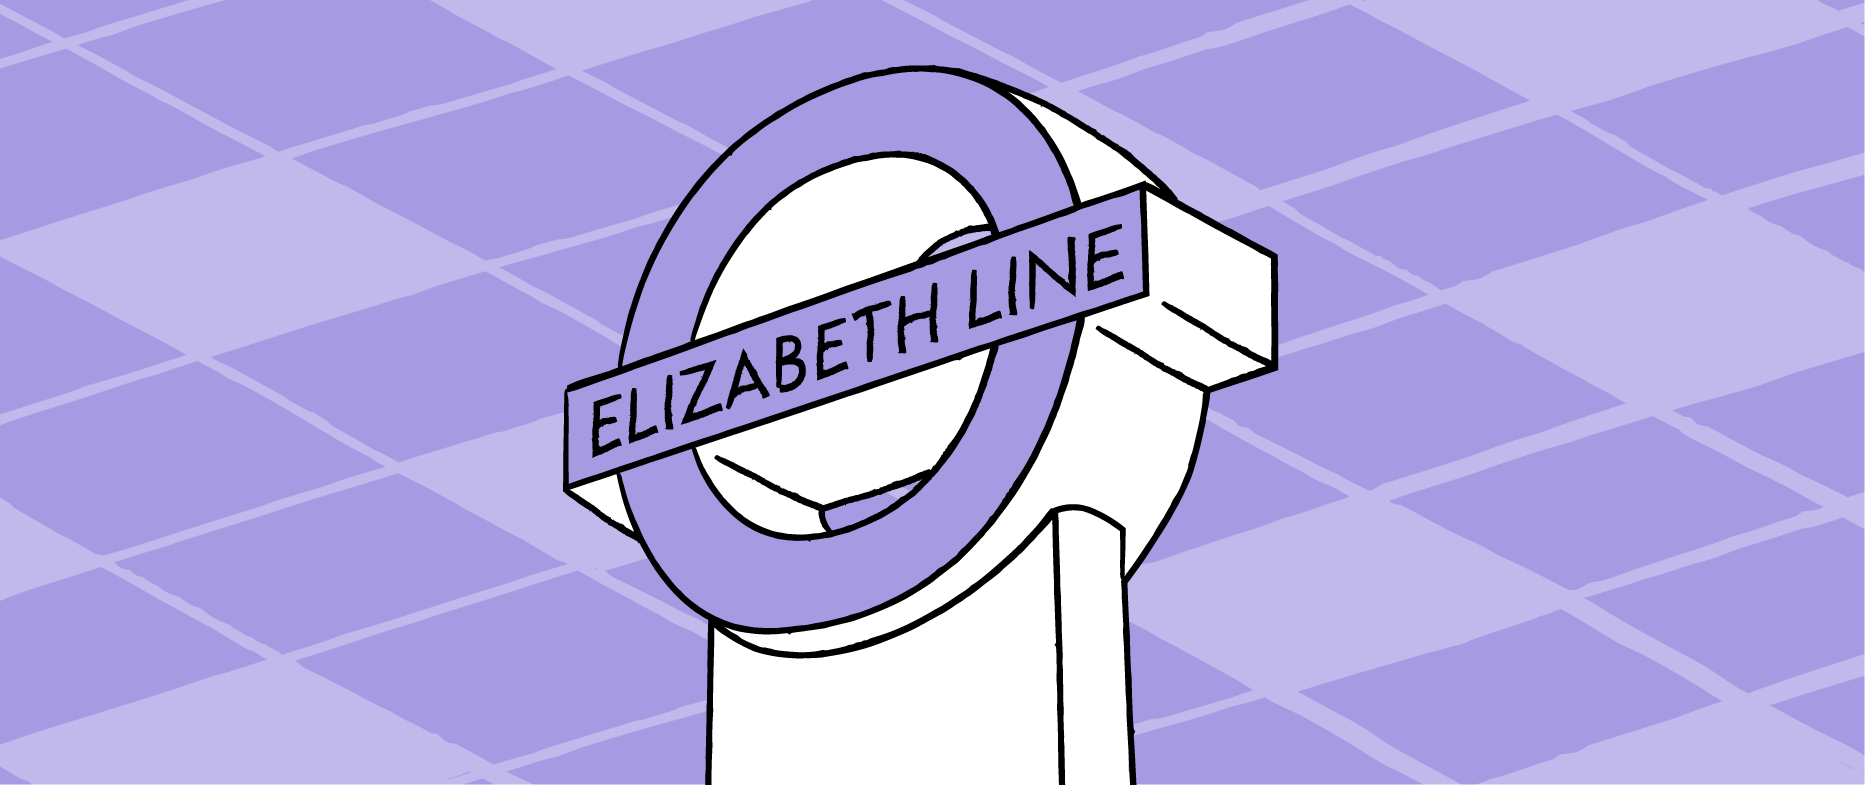 Elizabeth Line on the Tube